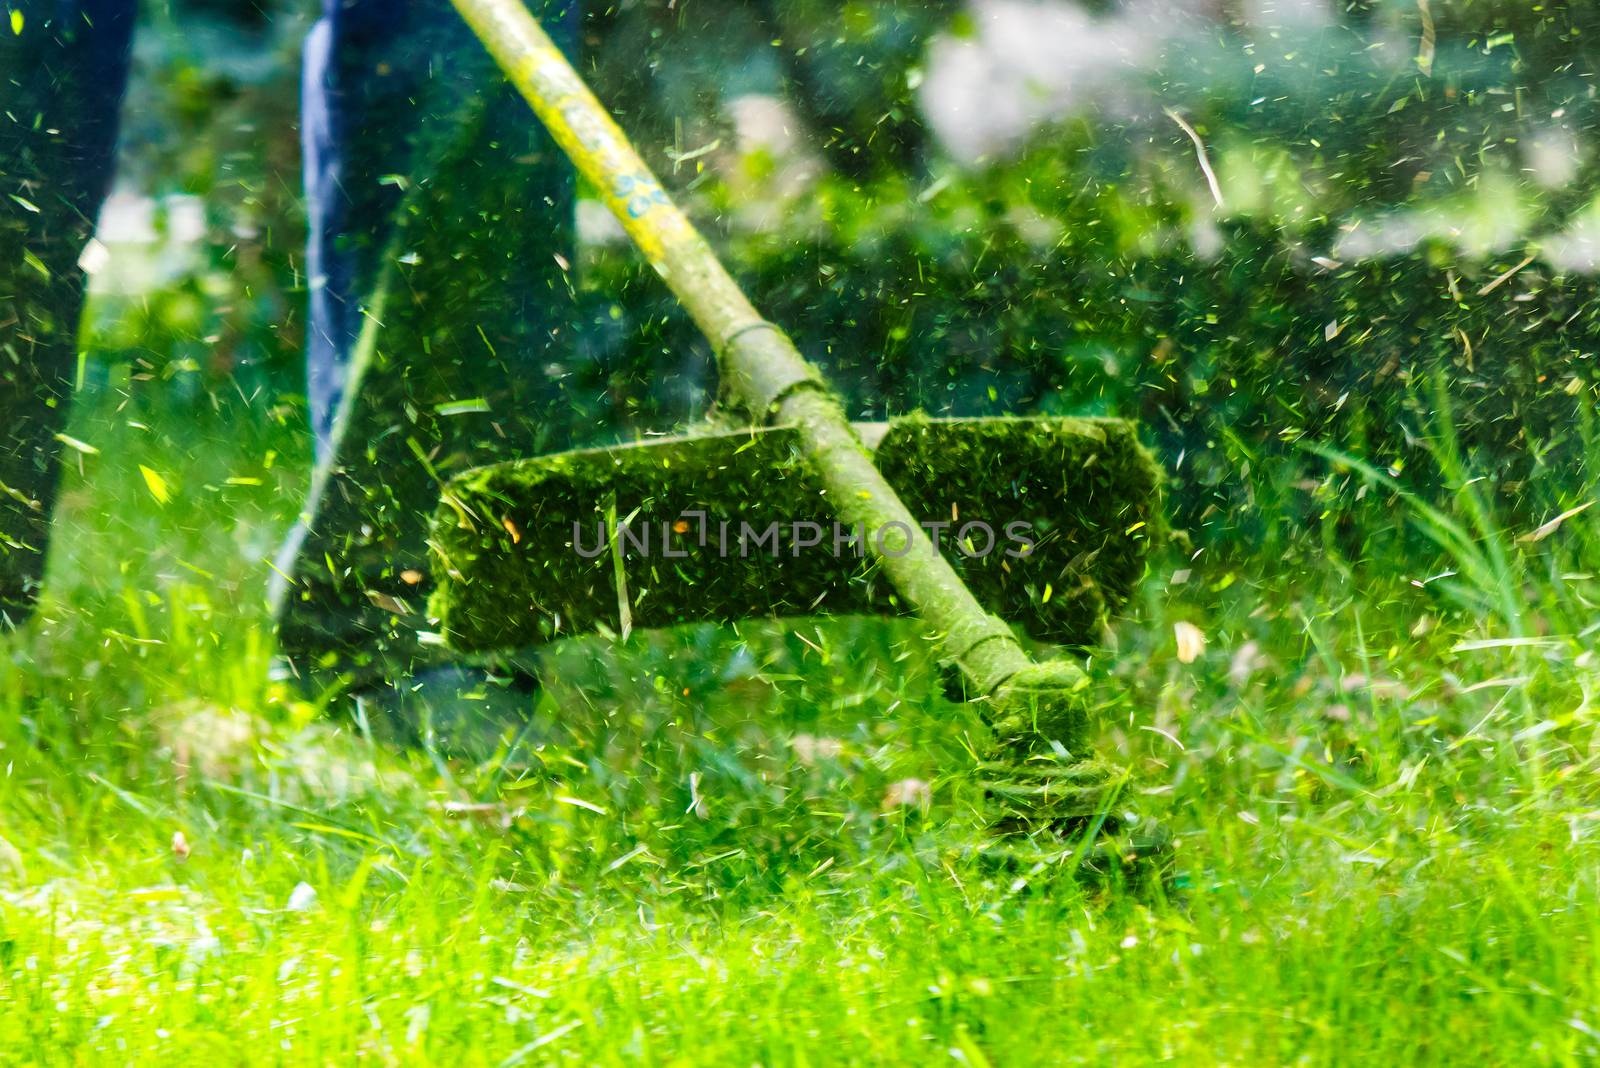 grass cutting in the garden by Pellinni